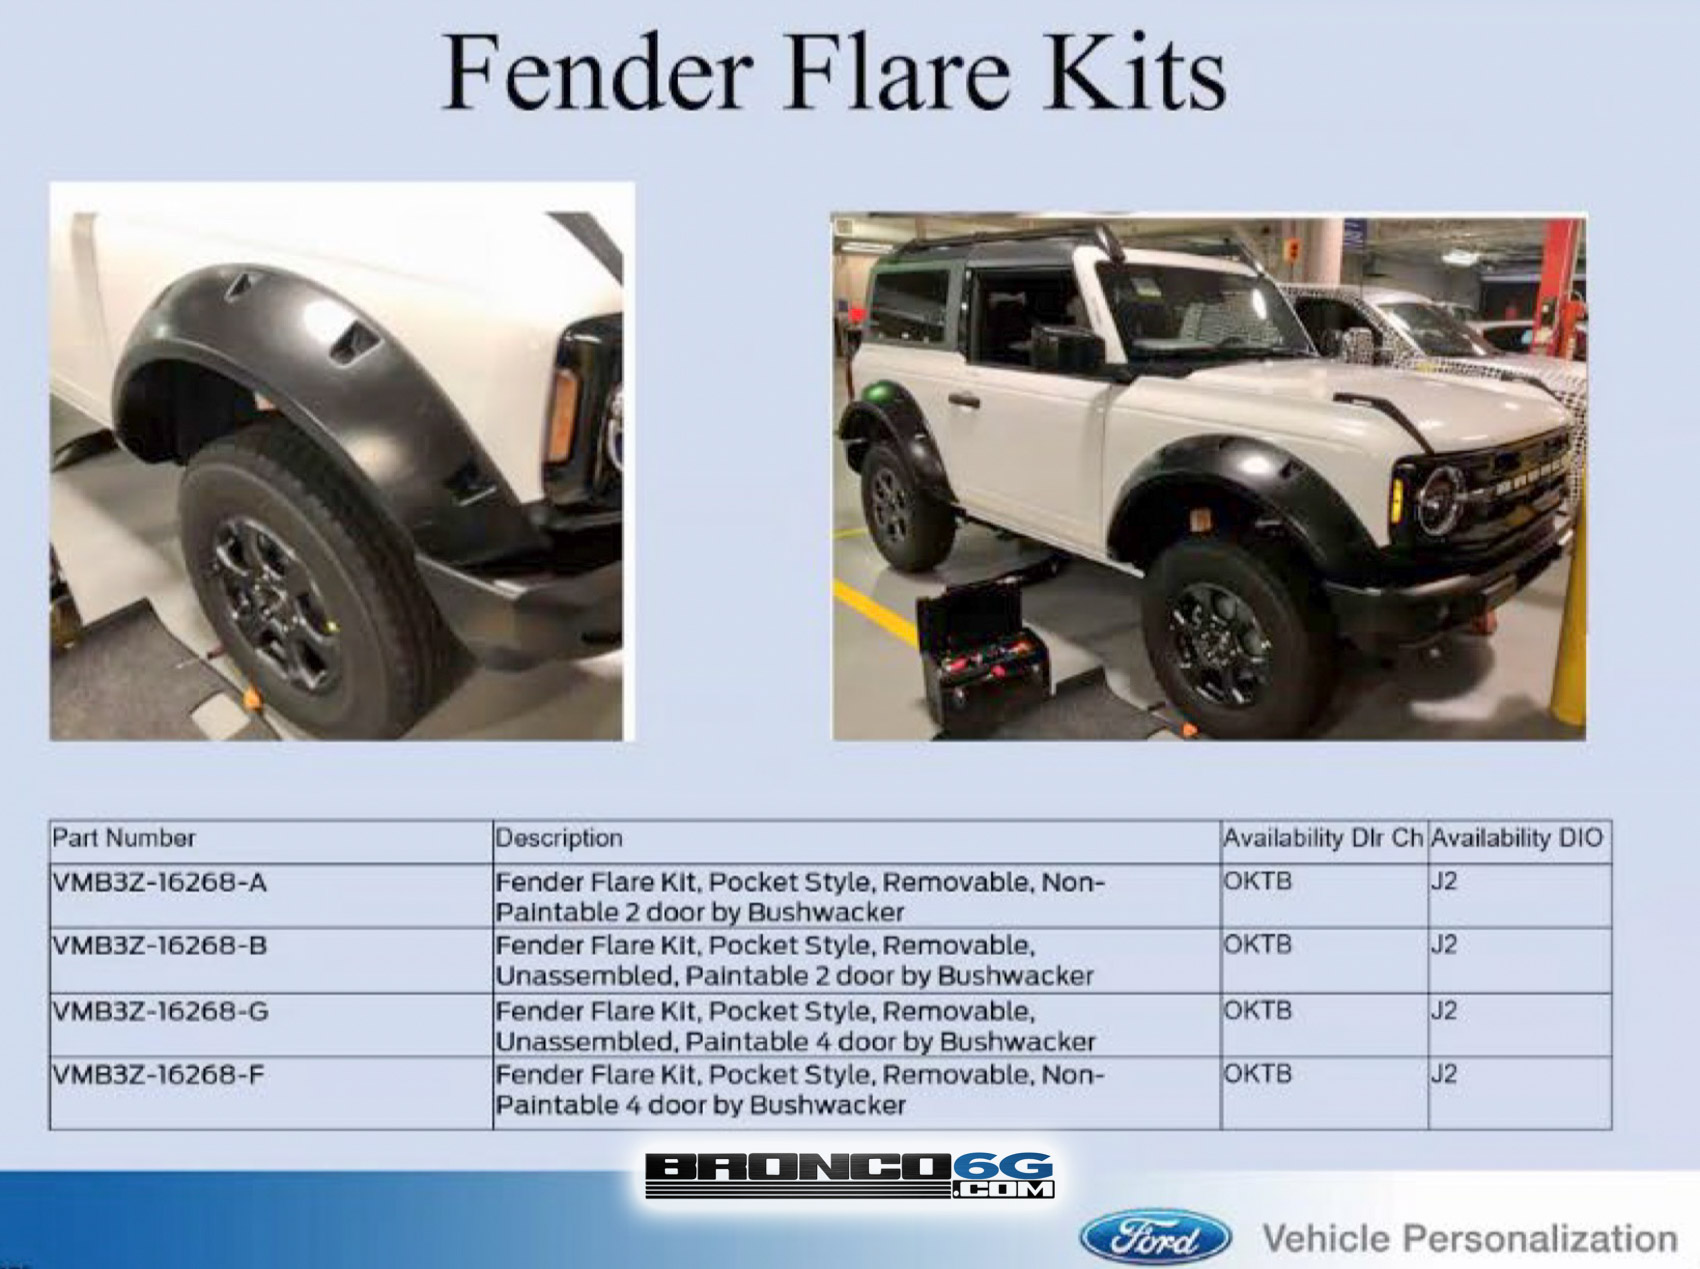 2021 Bronco Fender Flare Kits Bushwacker Pocket Style - Ford Performance OEM factory accessory.jpg